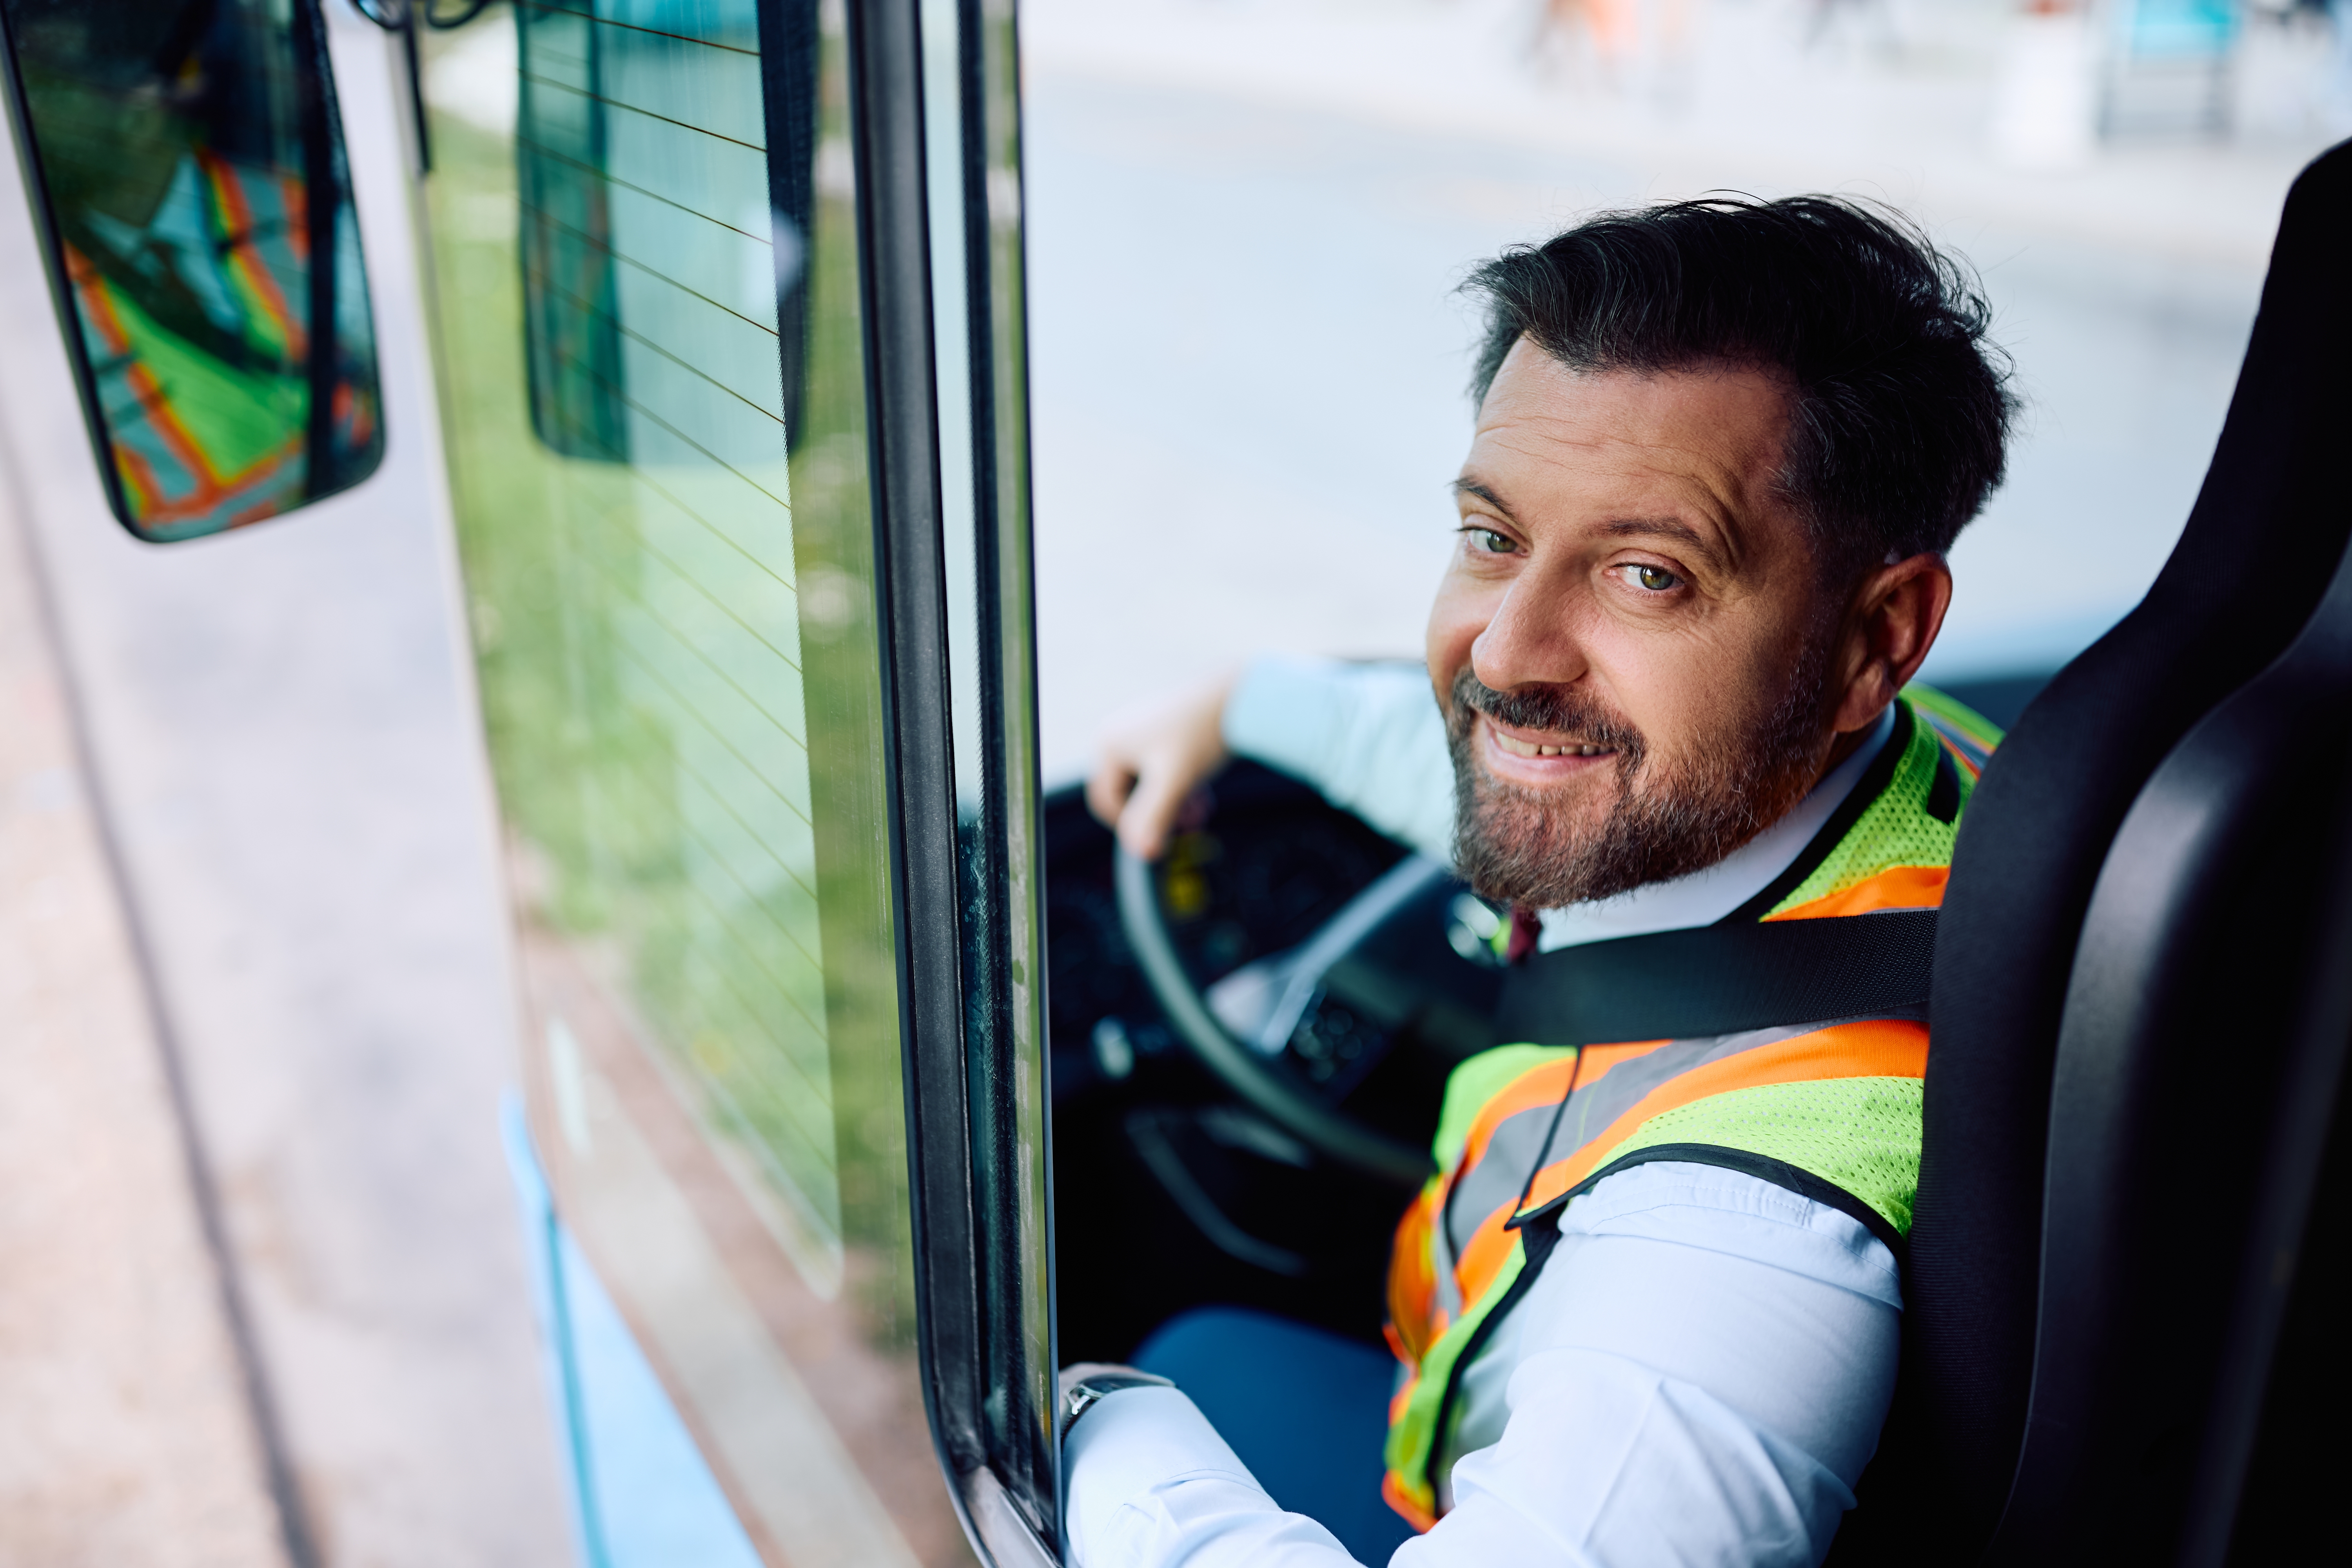 Bus driver | Source: Shutterstock